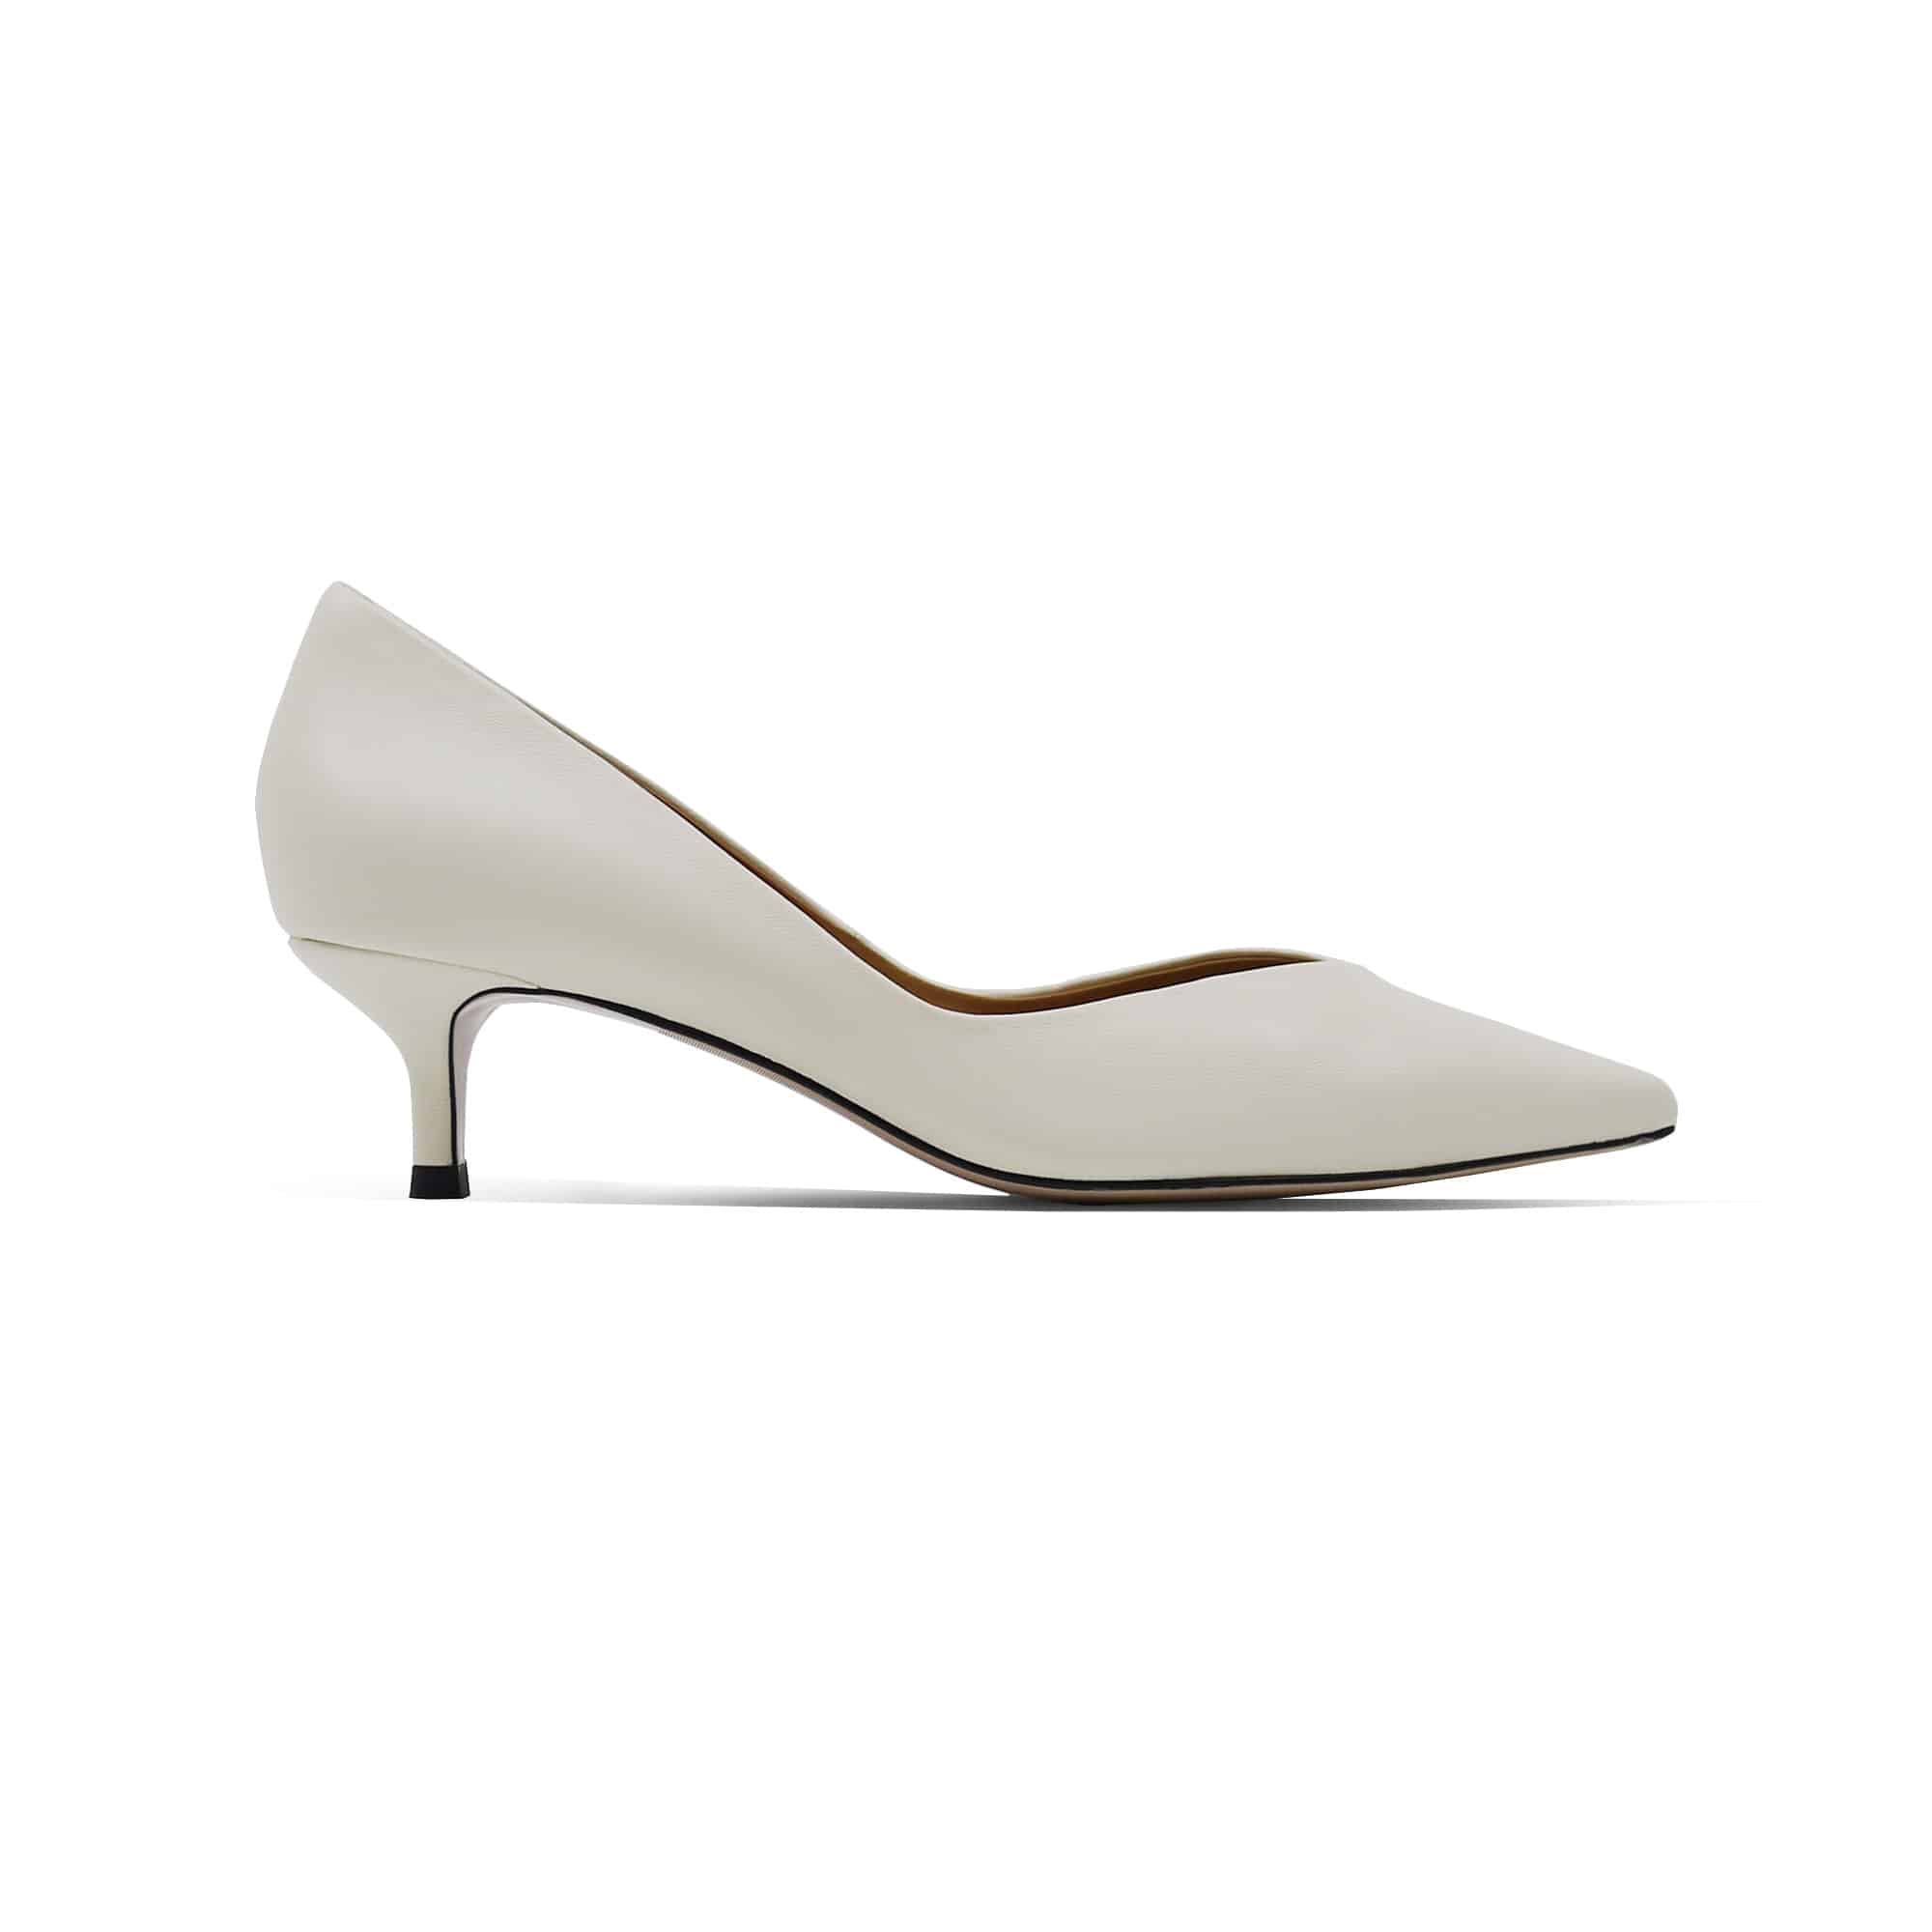 Buy > 2 inch heels white > in stock